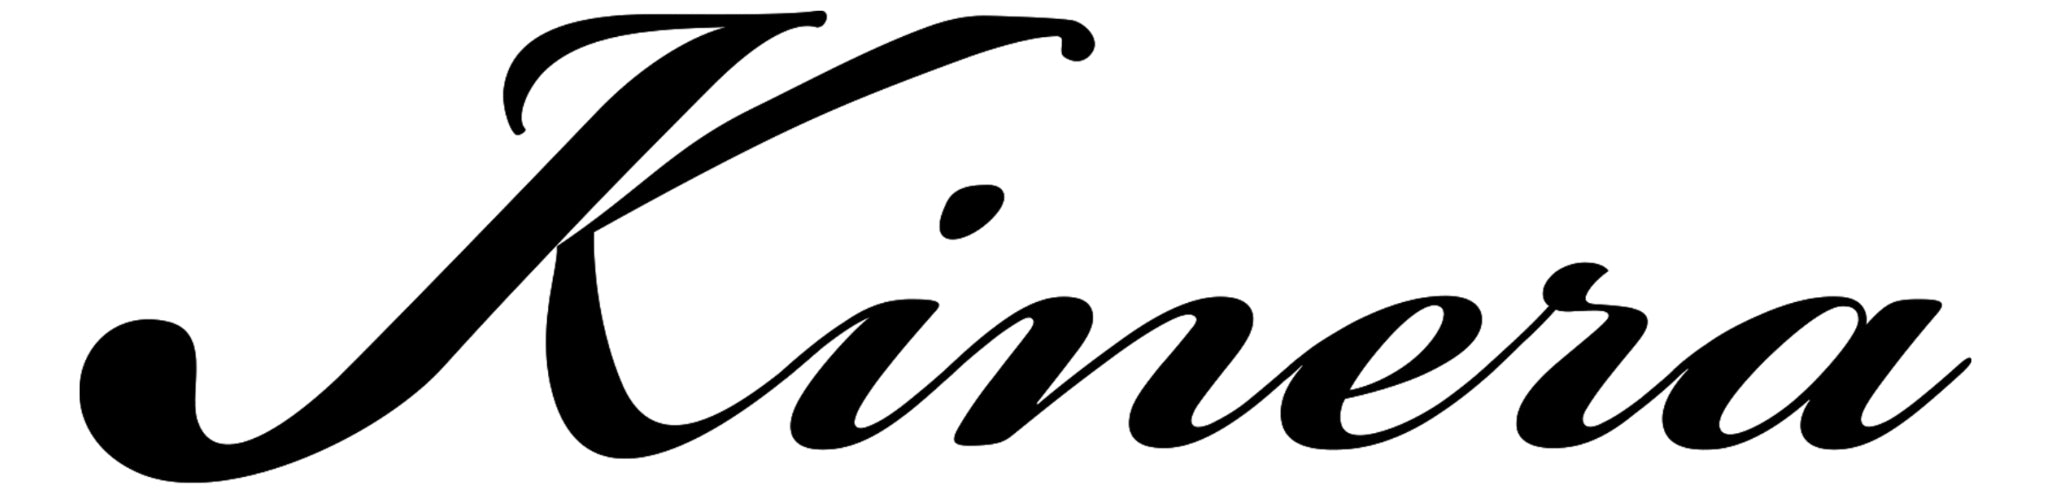 Kinera brand logo black